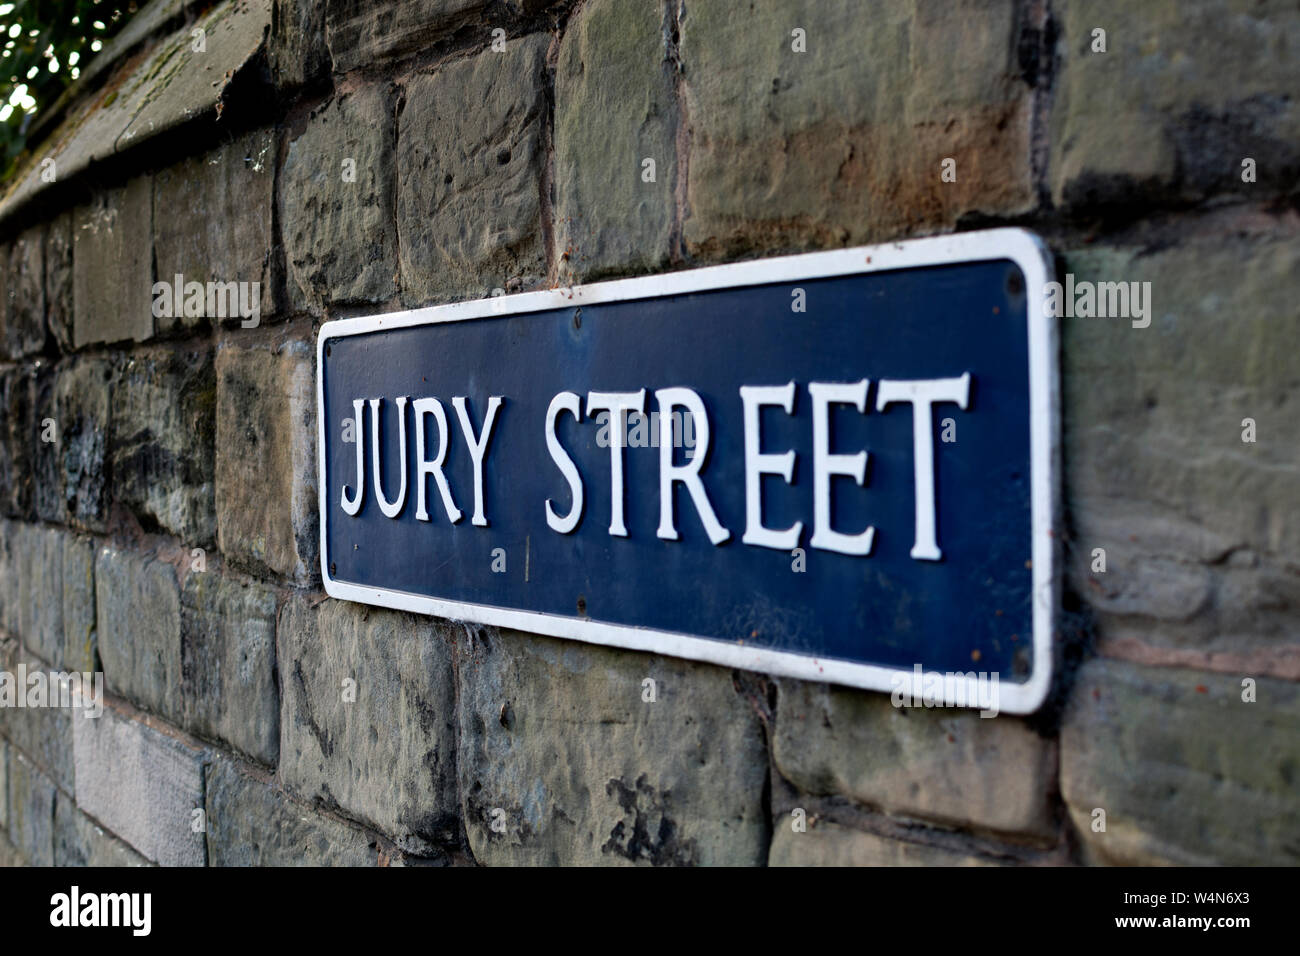 Jury Street sign, Warwick, Warwickshire, England, UK Stock Photo